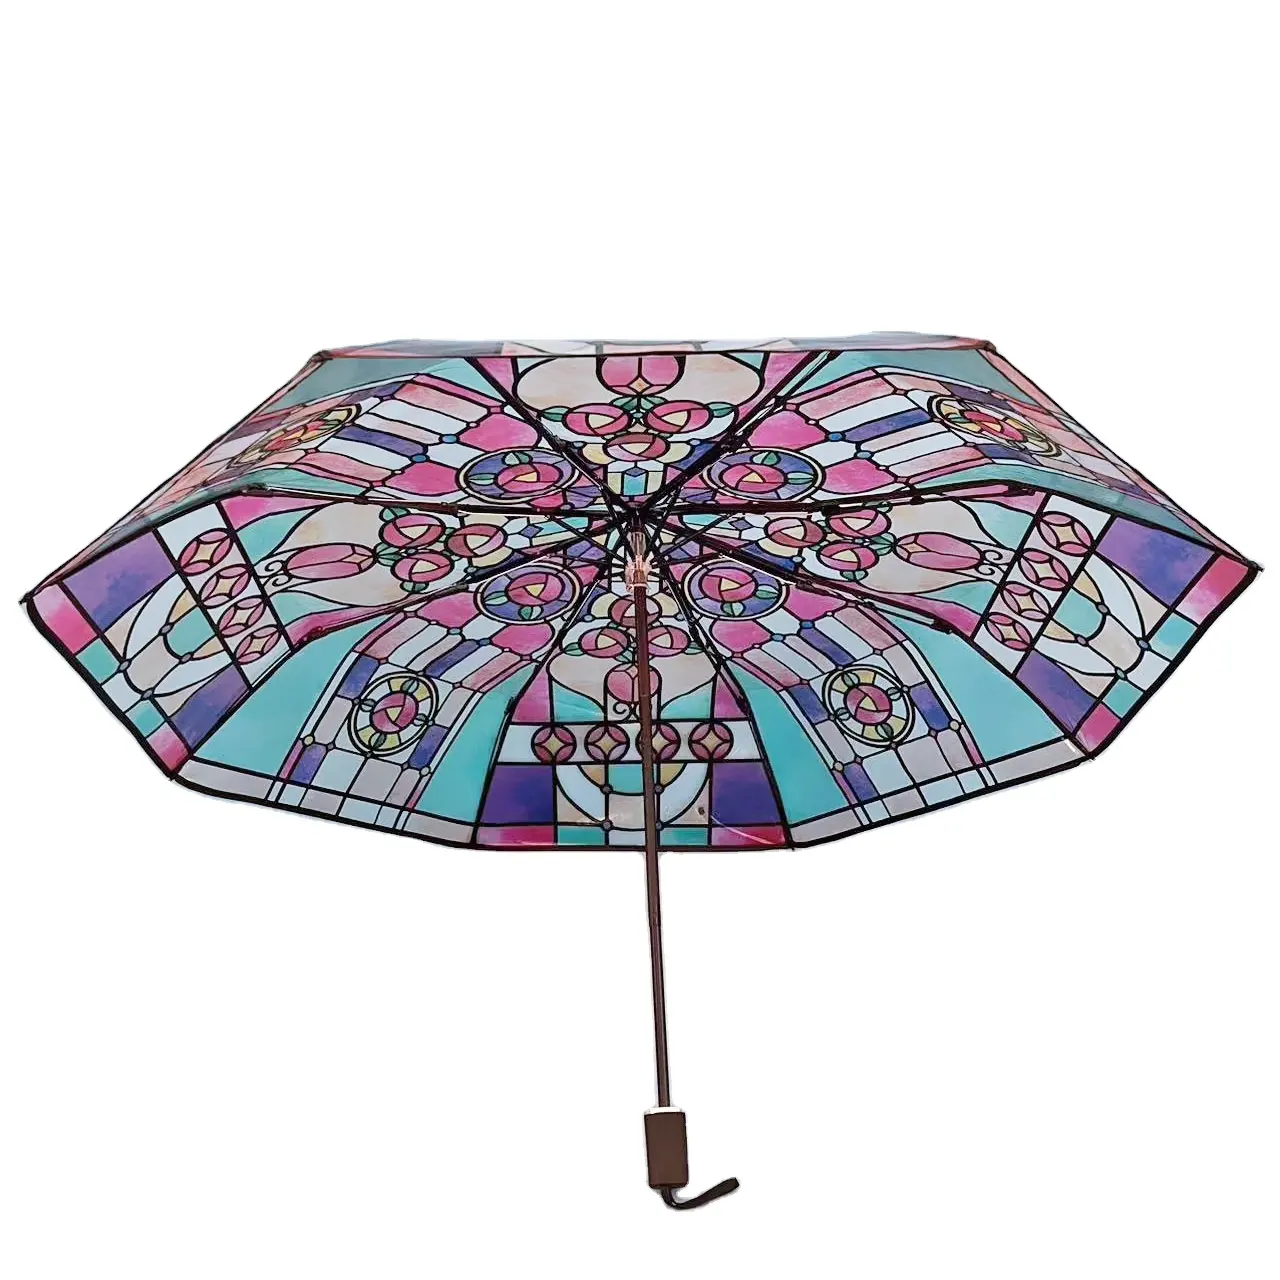 Payung lipat otomatis lucu payung hujan dapat dilipat buka dan tutup otomatis payung transparan kompak